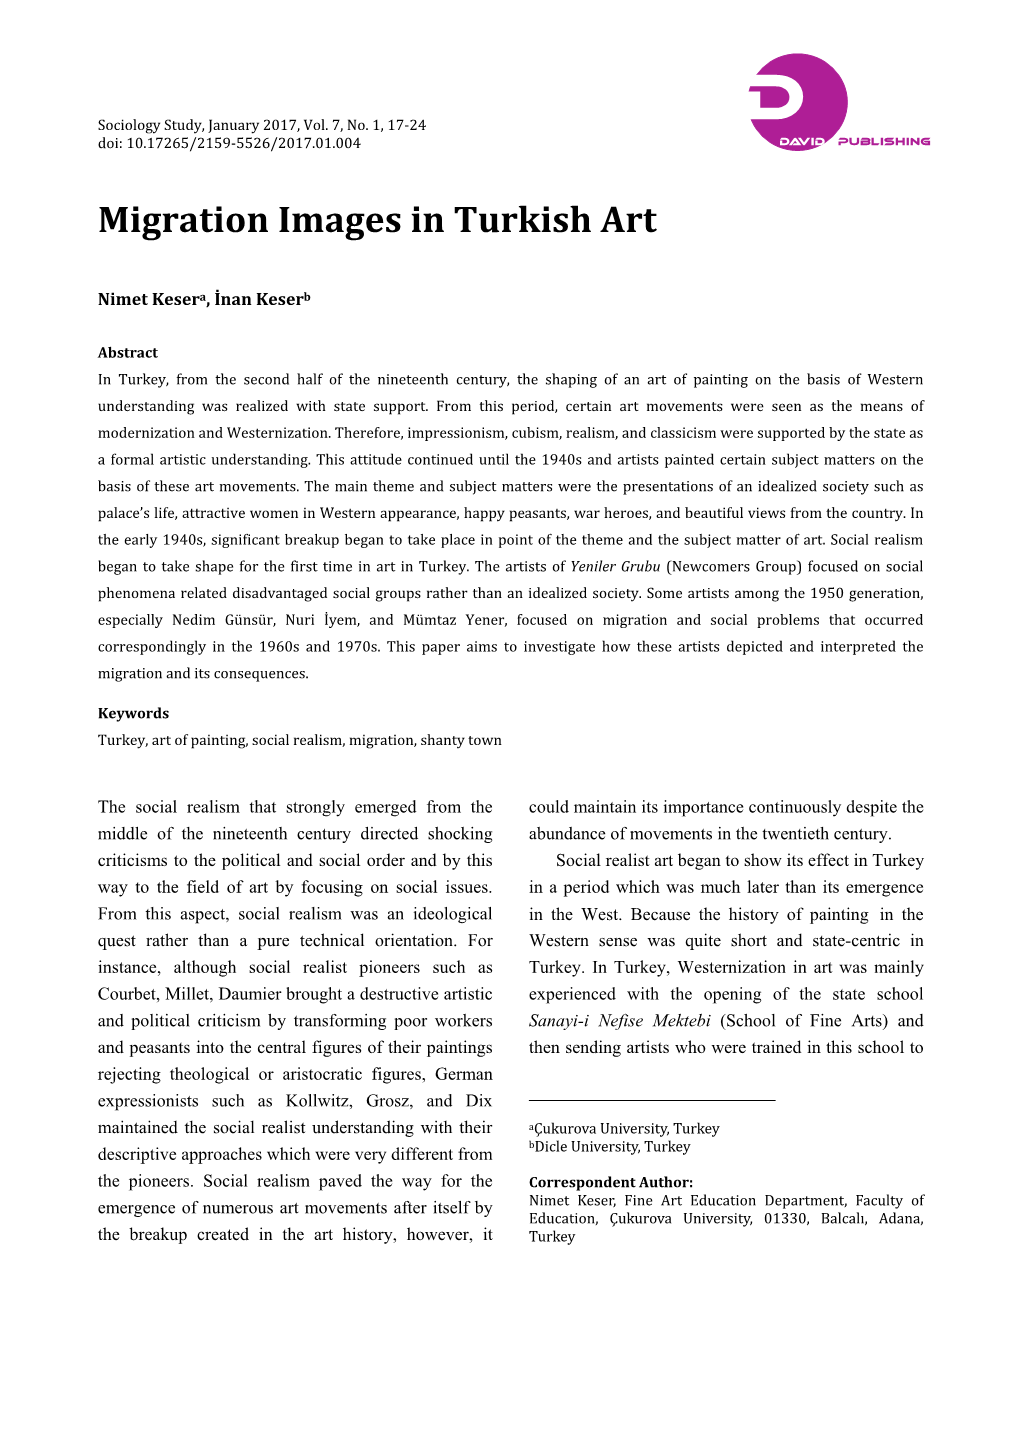 Migration Images in Turkish Art